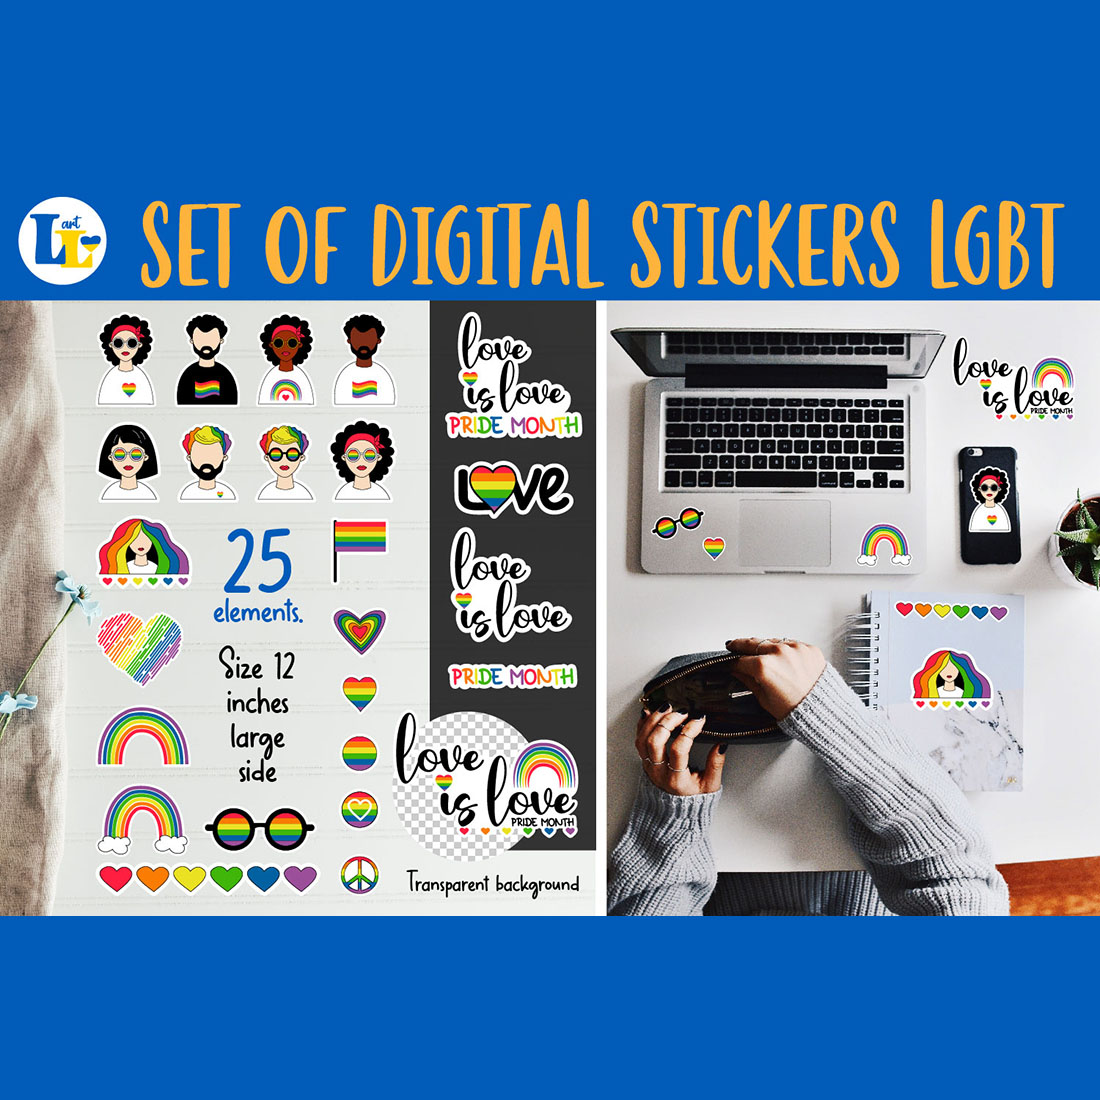 Digital Stickers LGBTQ Community Symbols Preview Image.